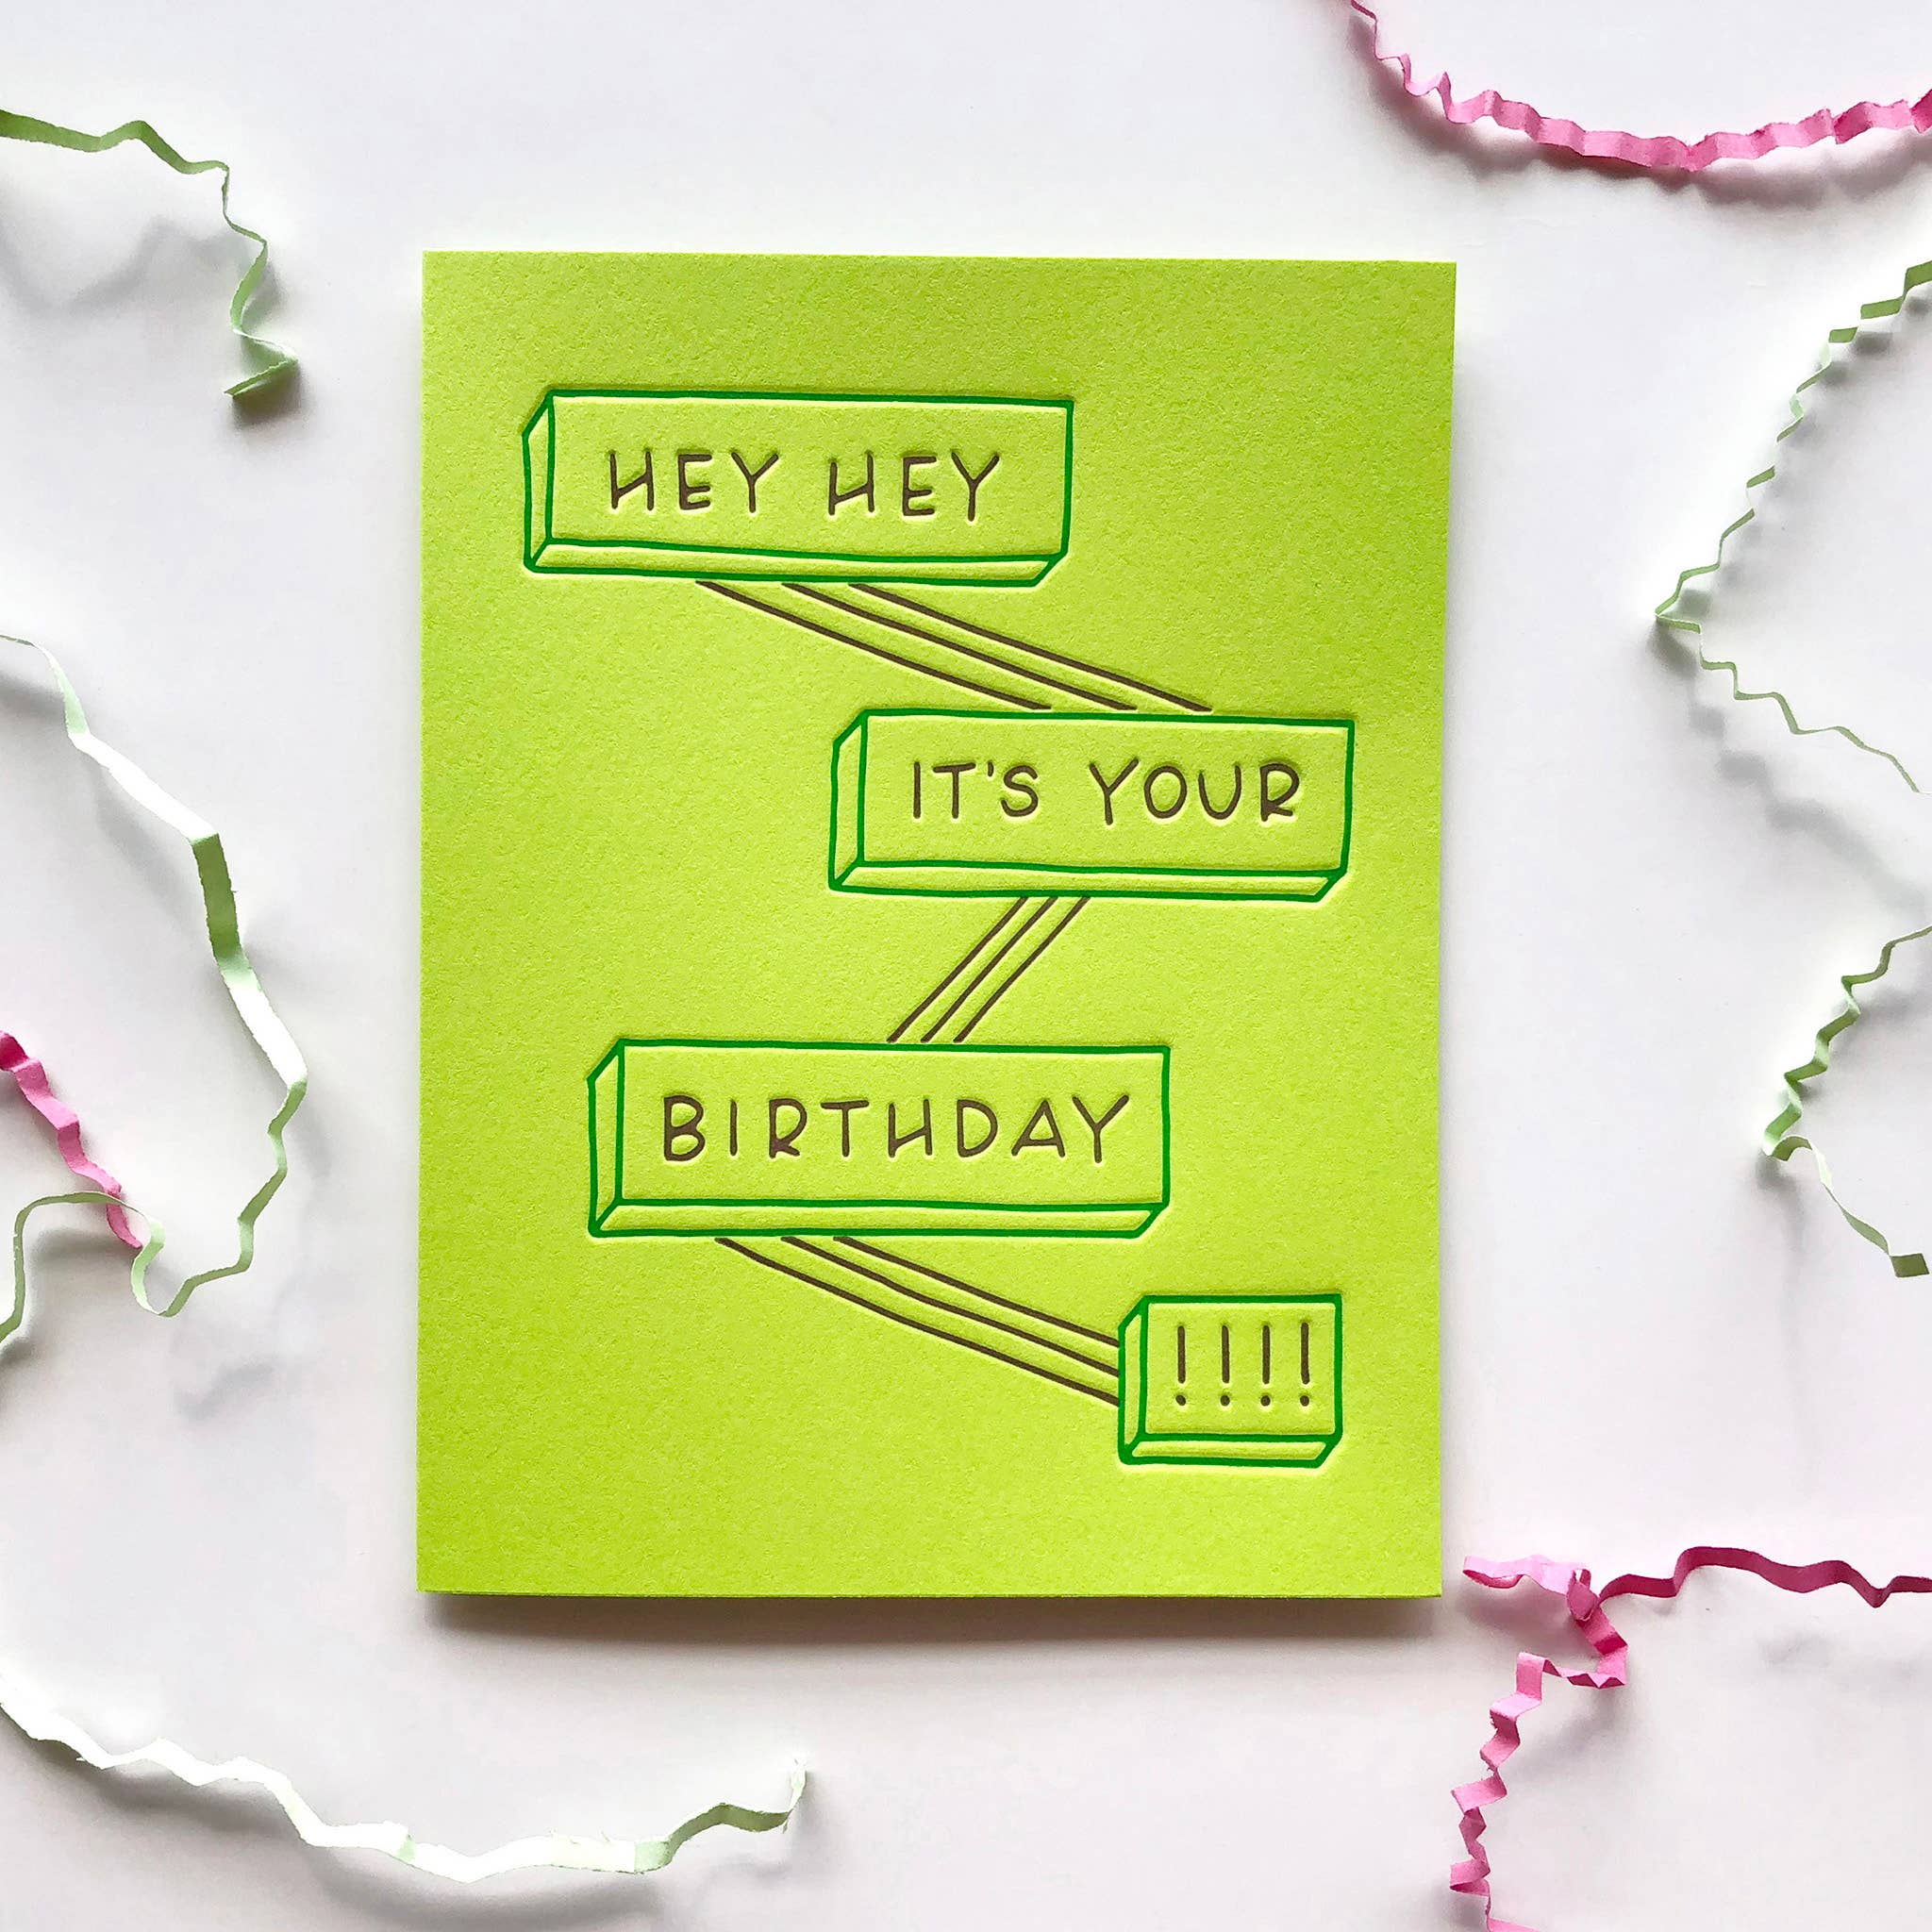 Hey Hey Birthday - Birthday card